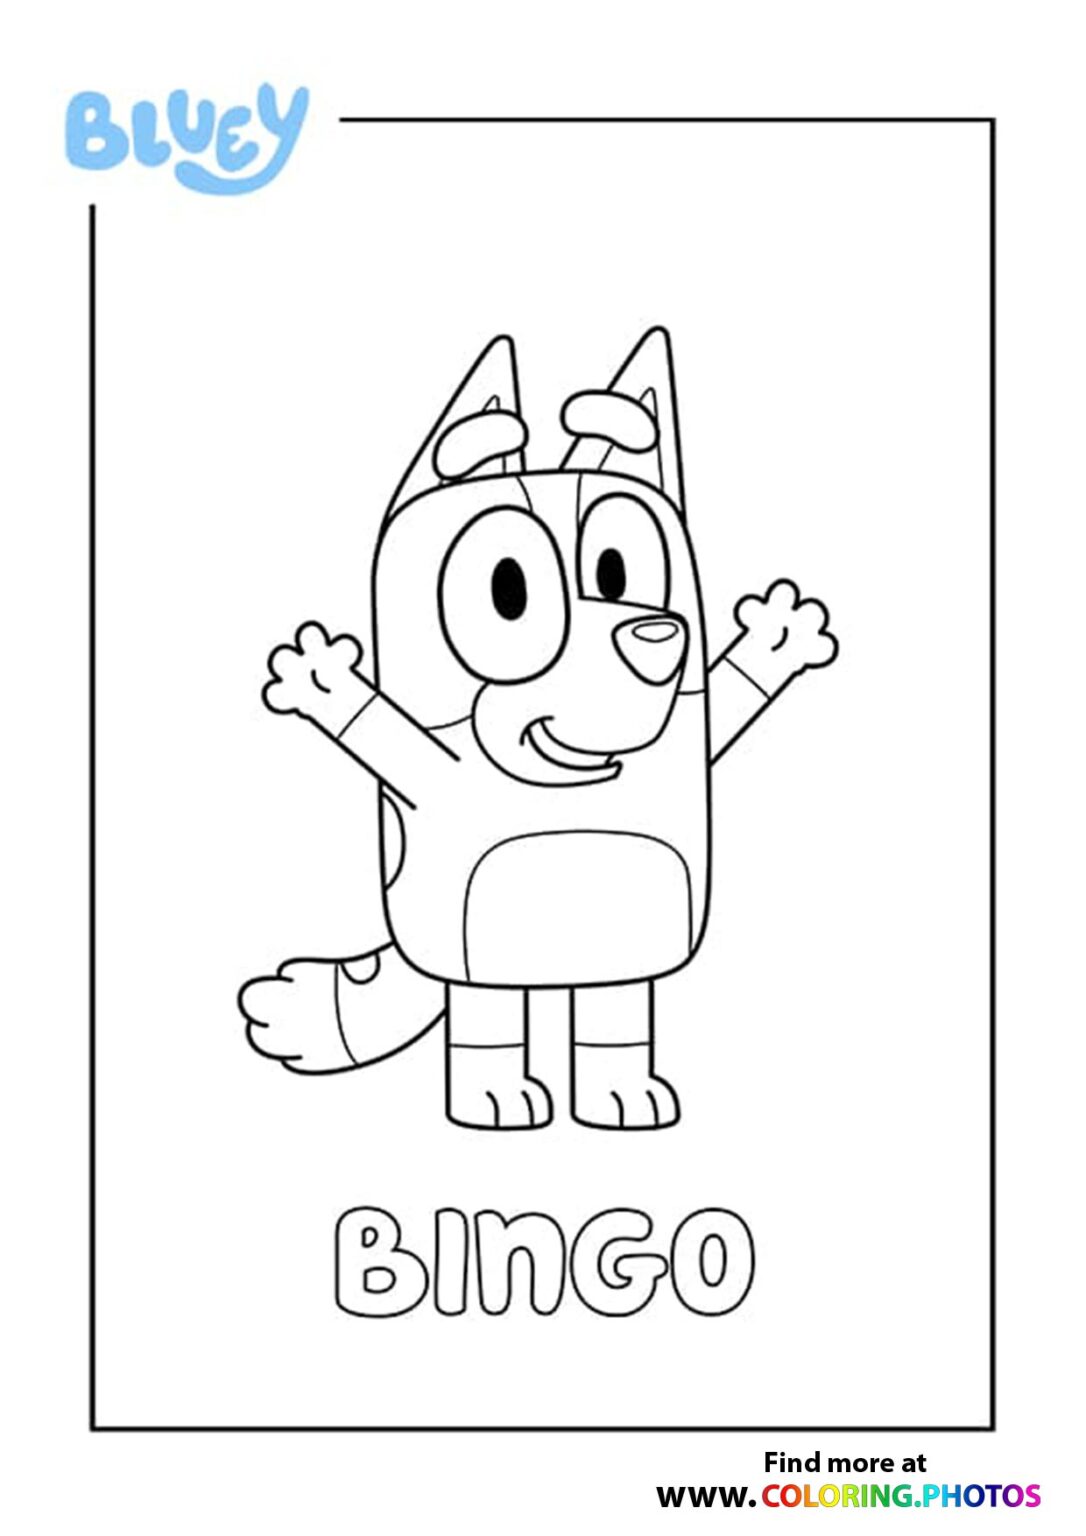 Bluey Bingo Coloring Page 1086x1536 